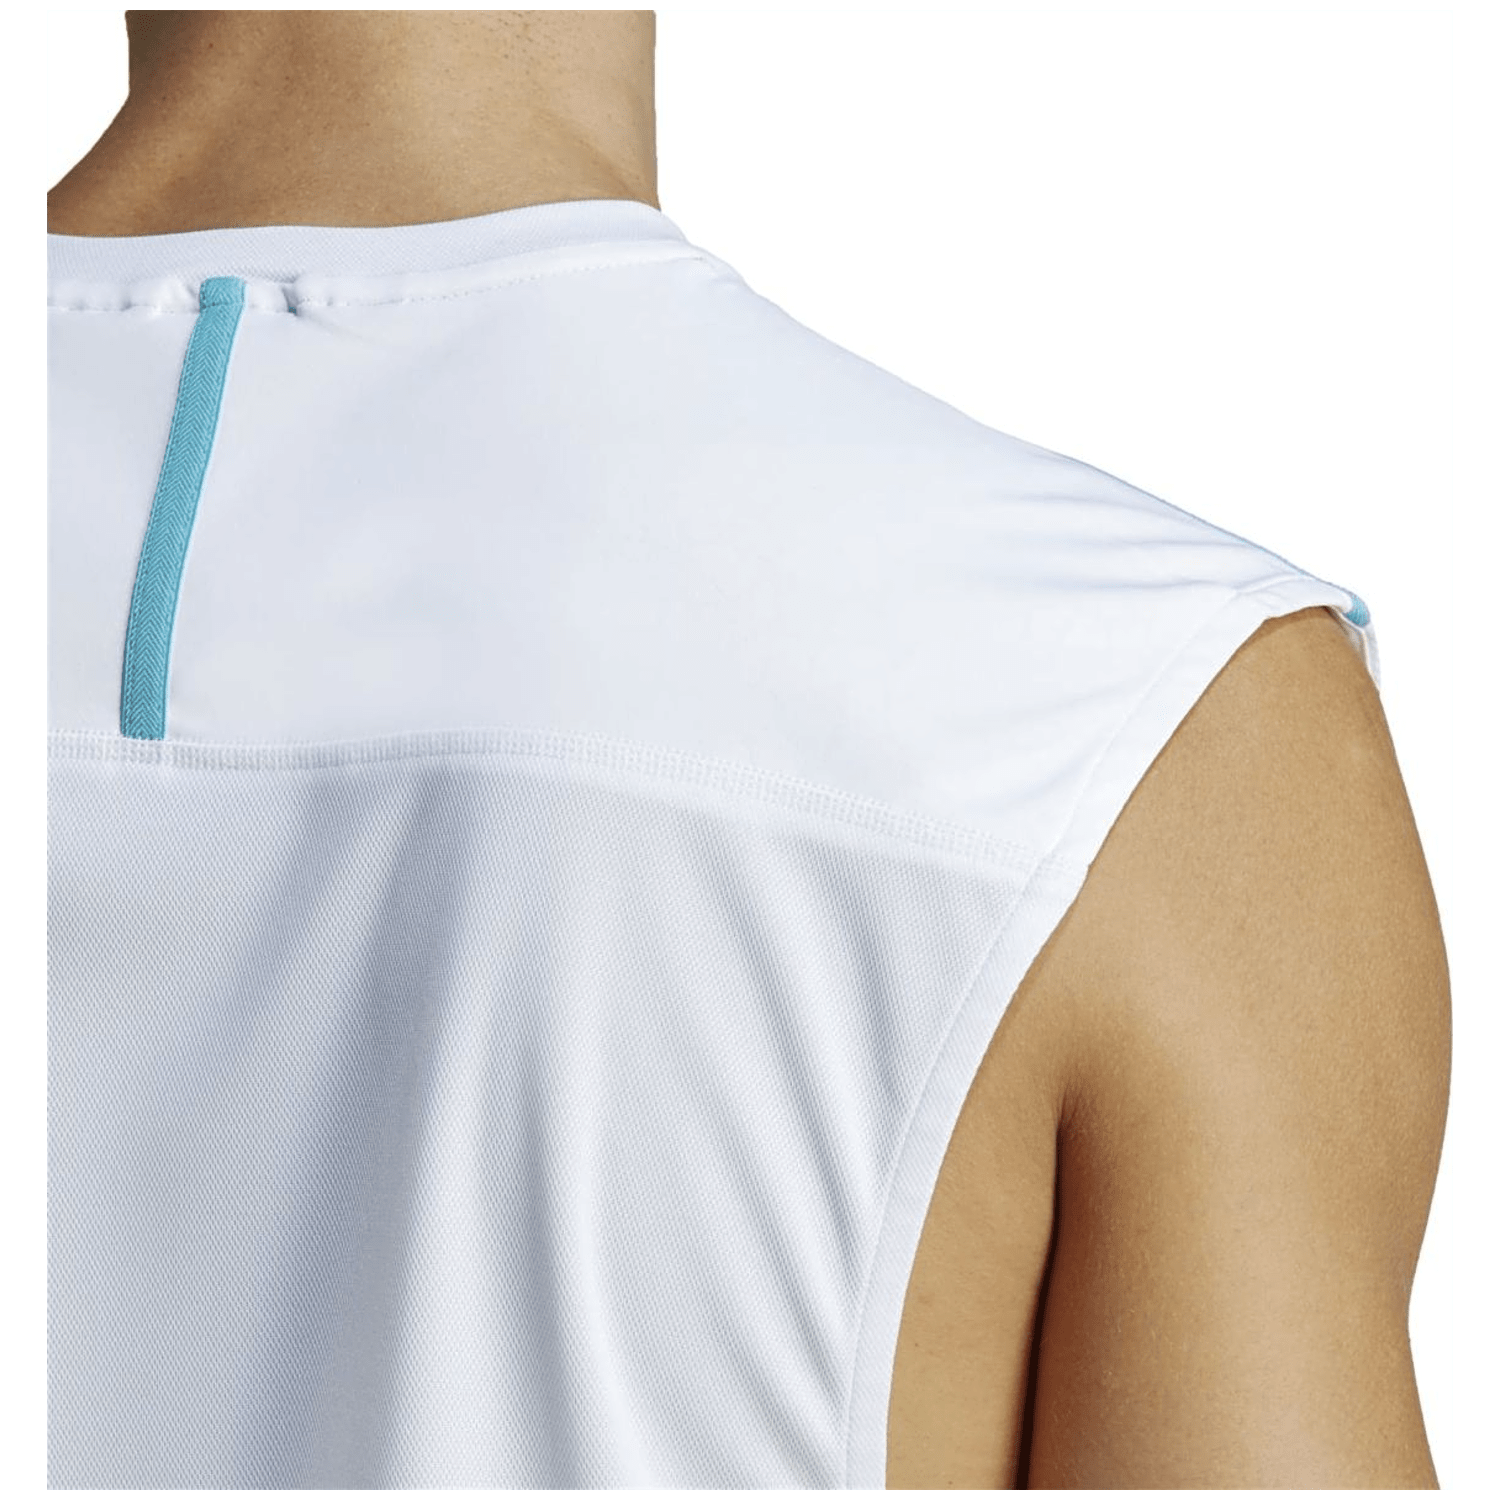 Adidas Workout Base Sleeveless Shirt Herren